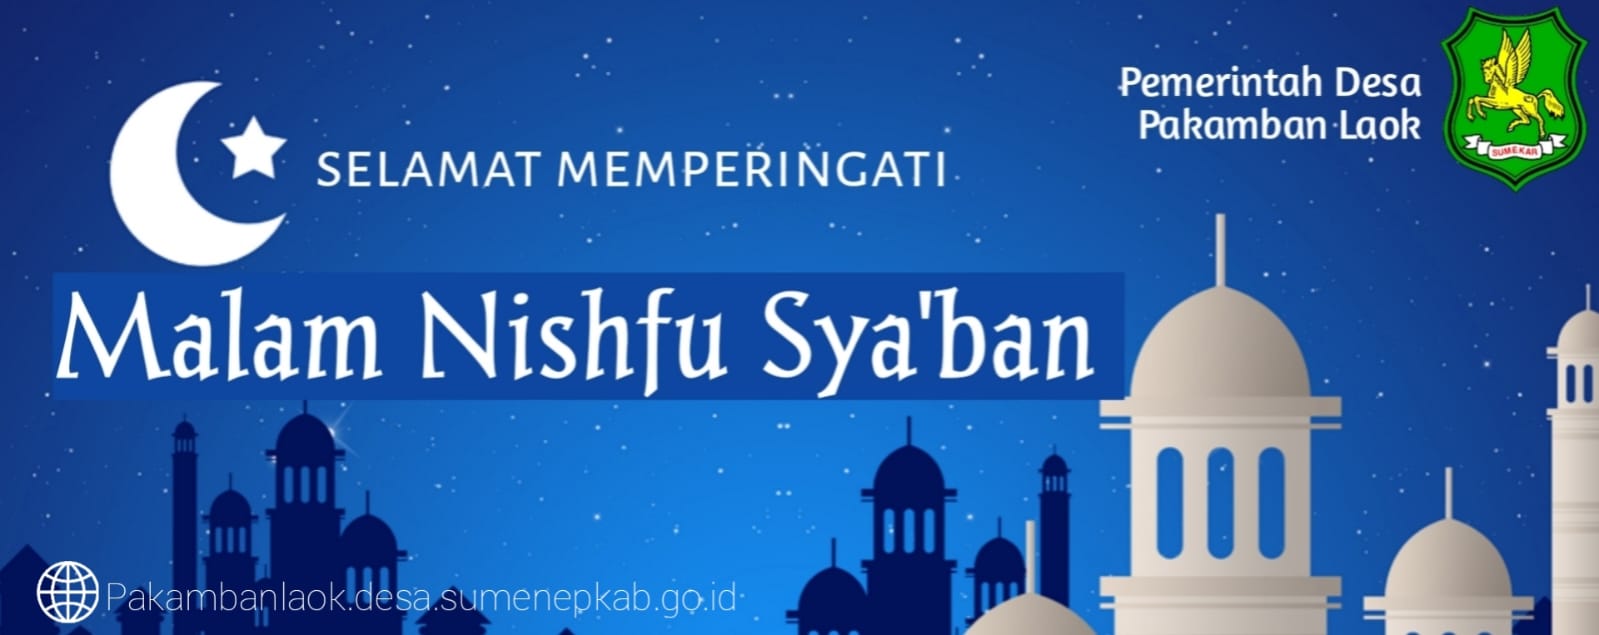 Masyarakat Pakamban Laok memperingati Malam Nishfu Sya'ban